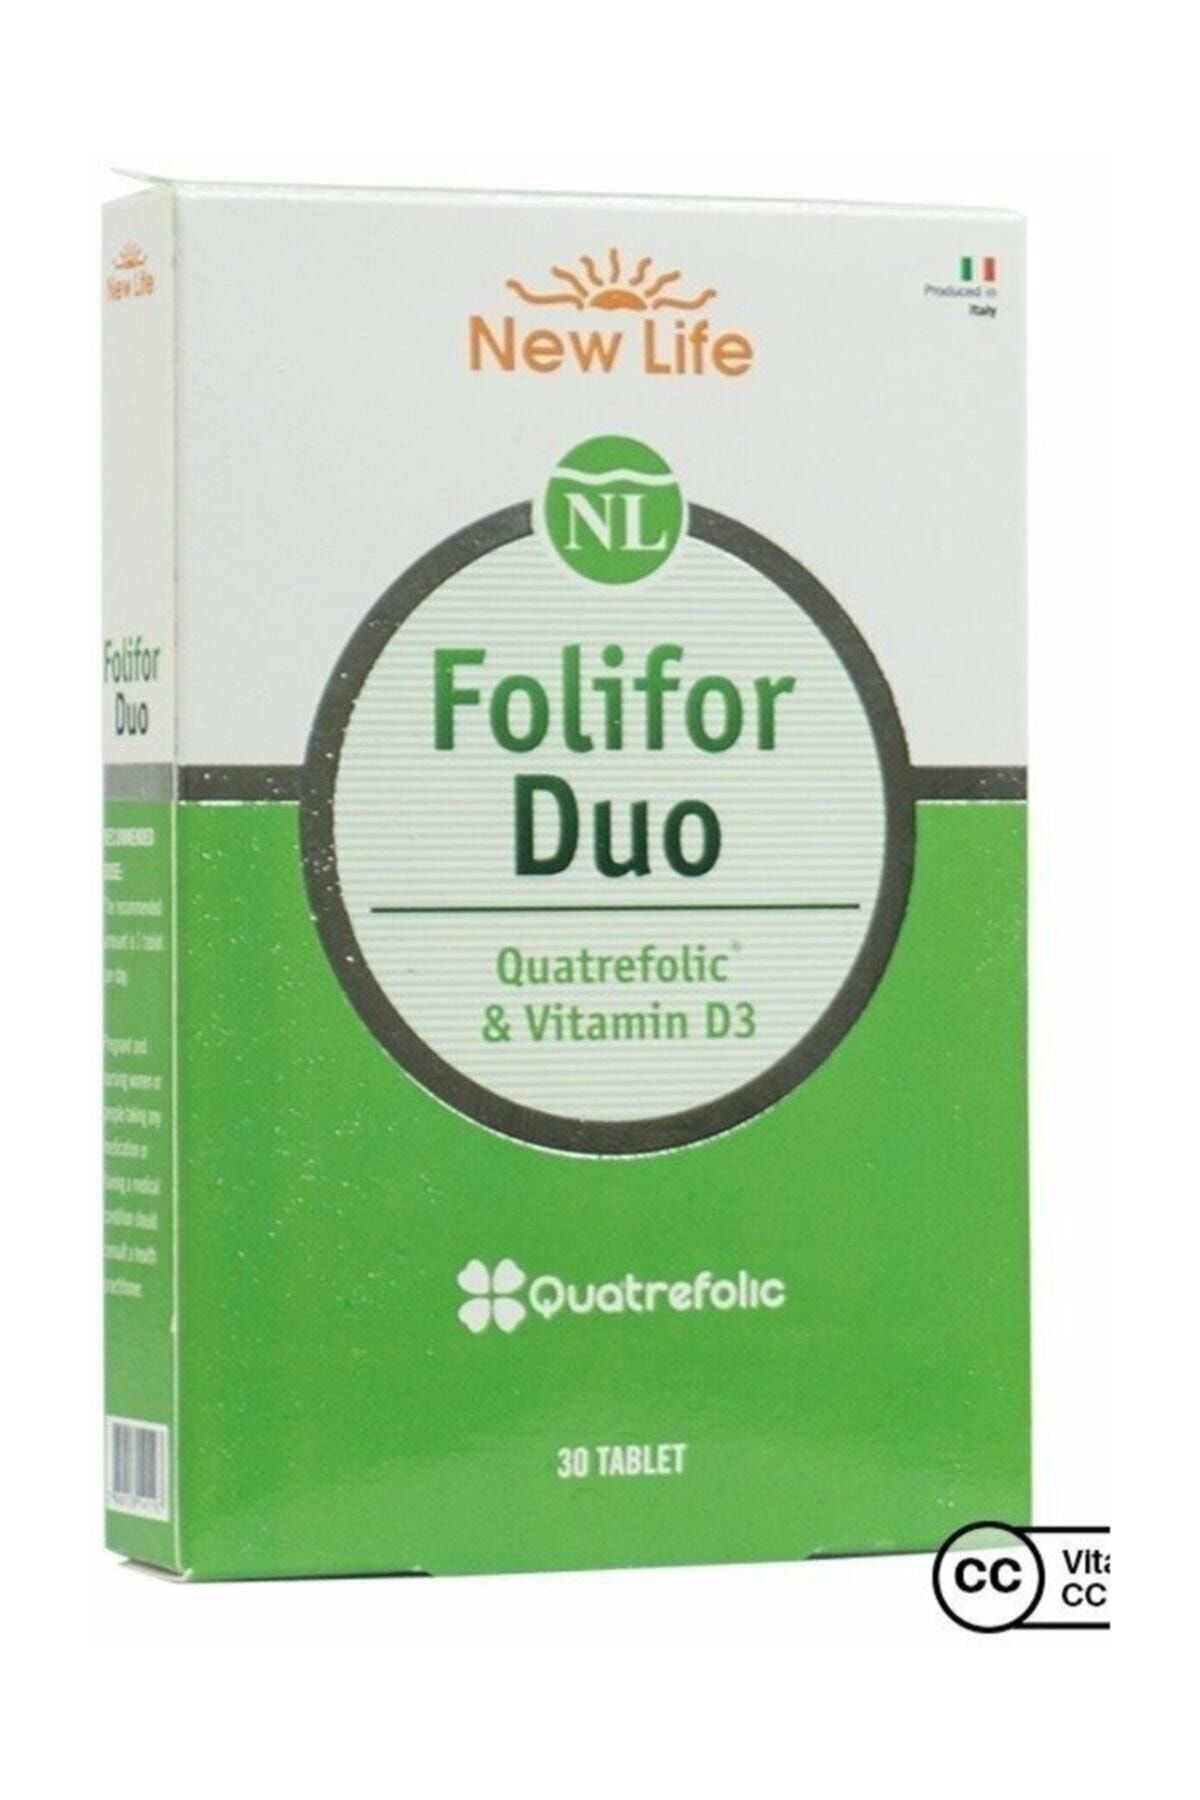 New Life Newlife Folifor Duo 30 Tablet